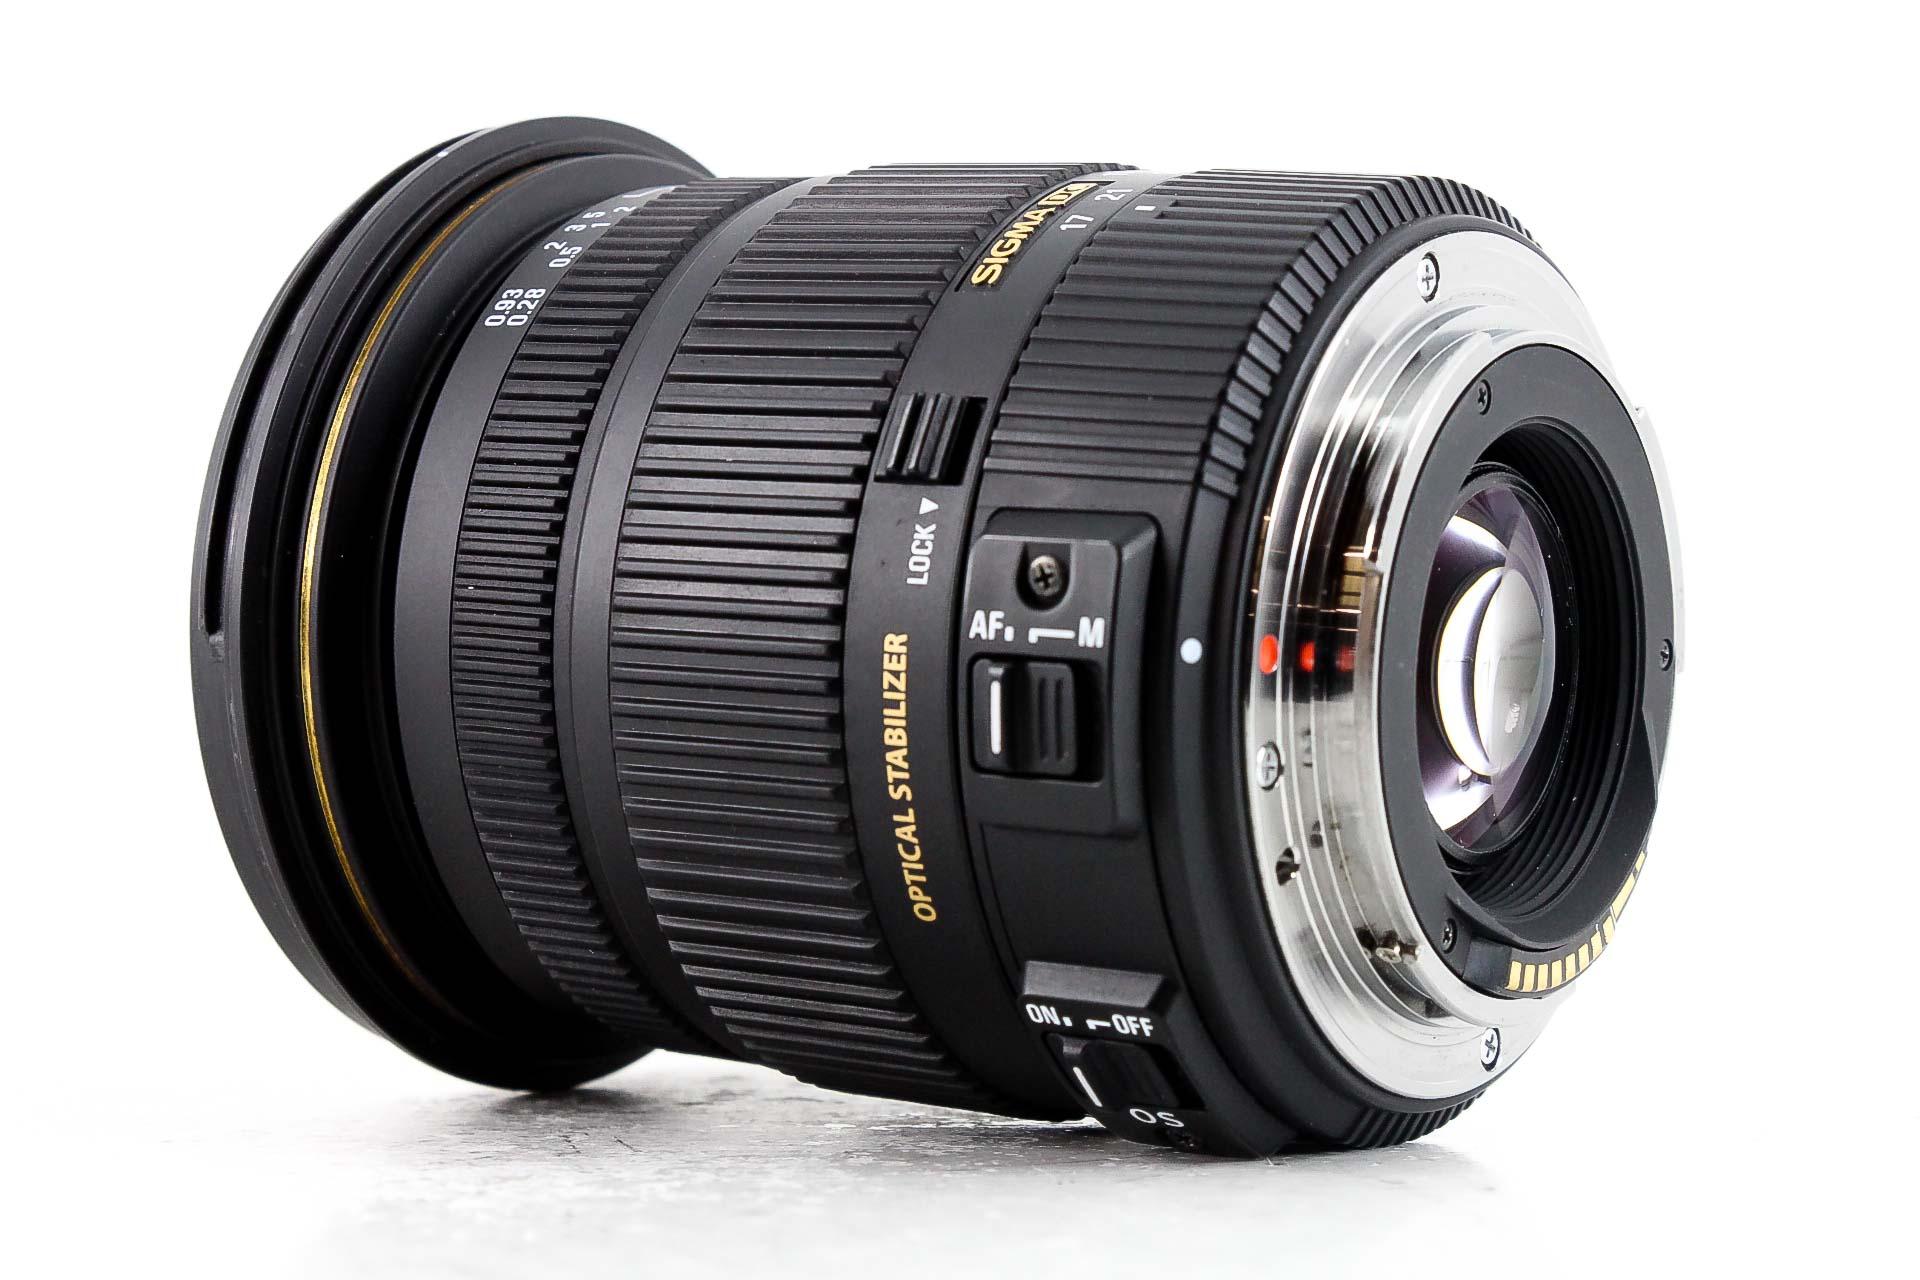 Sigma f2. Sigma 17-50mm f/2.8 Nikon. Sigma ex 17-50mm f/2.8. Sigma 17-50mm f/2.8 Canon. Sigma 17-50 f2.8 ex DC os HSM.